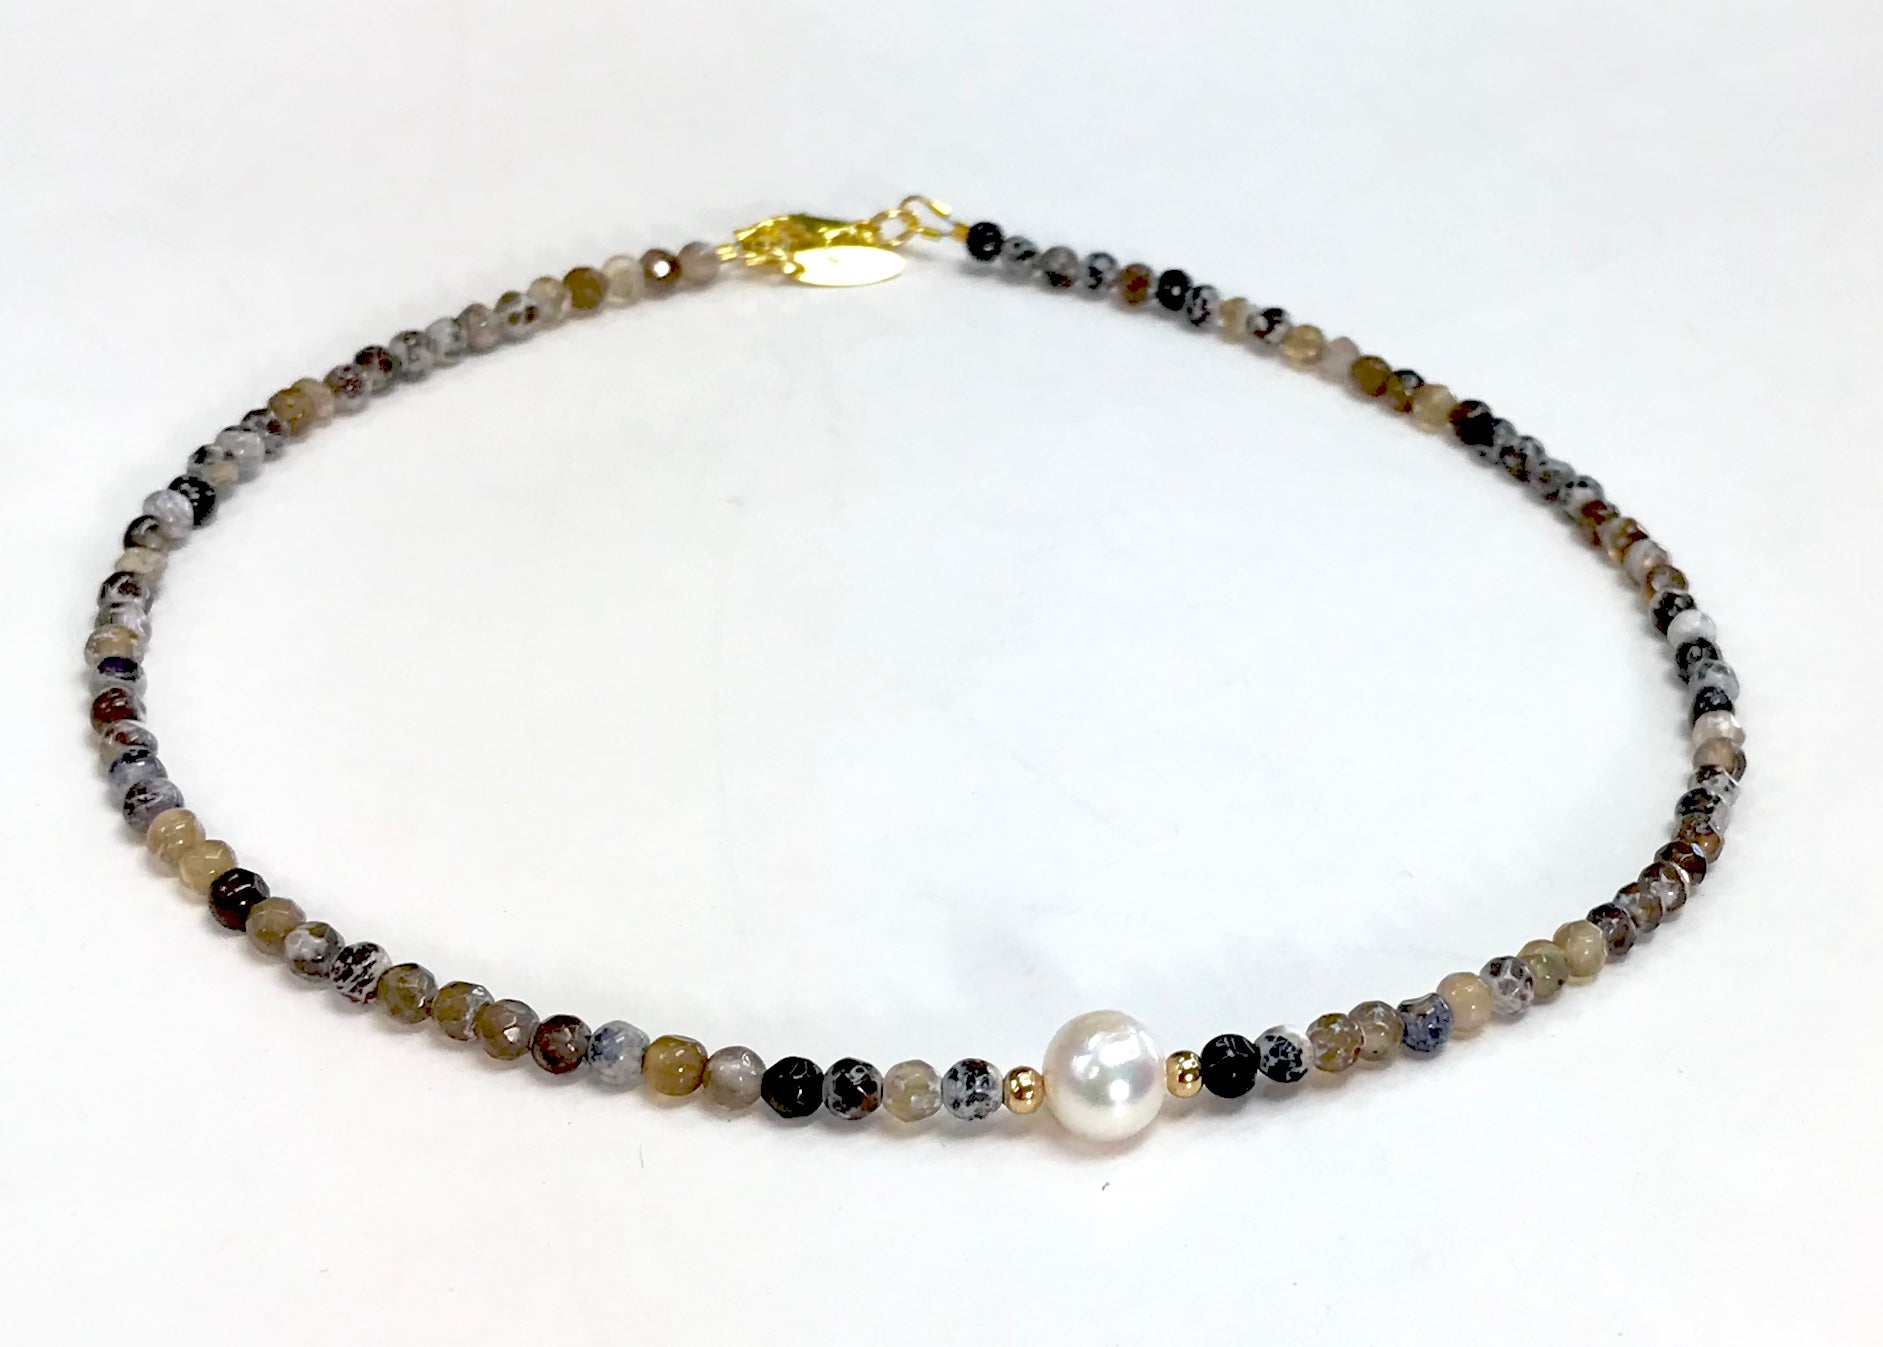 <b> Semiprecious Stones Necklace</b><Choker>/<i>Nlov Collection</i>